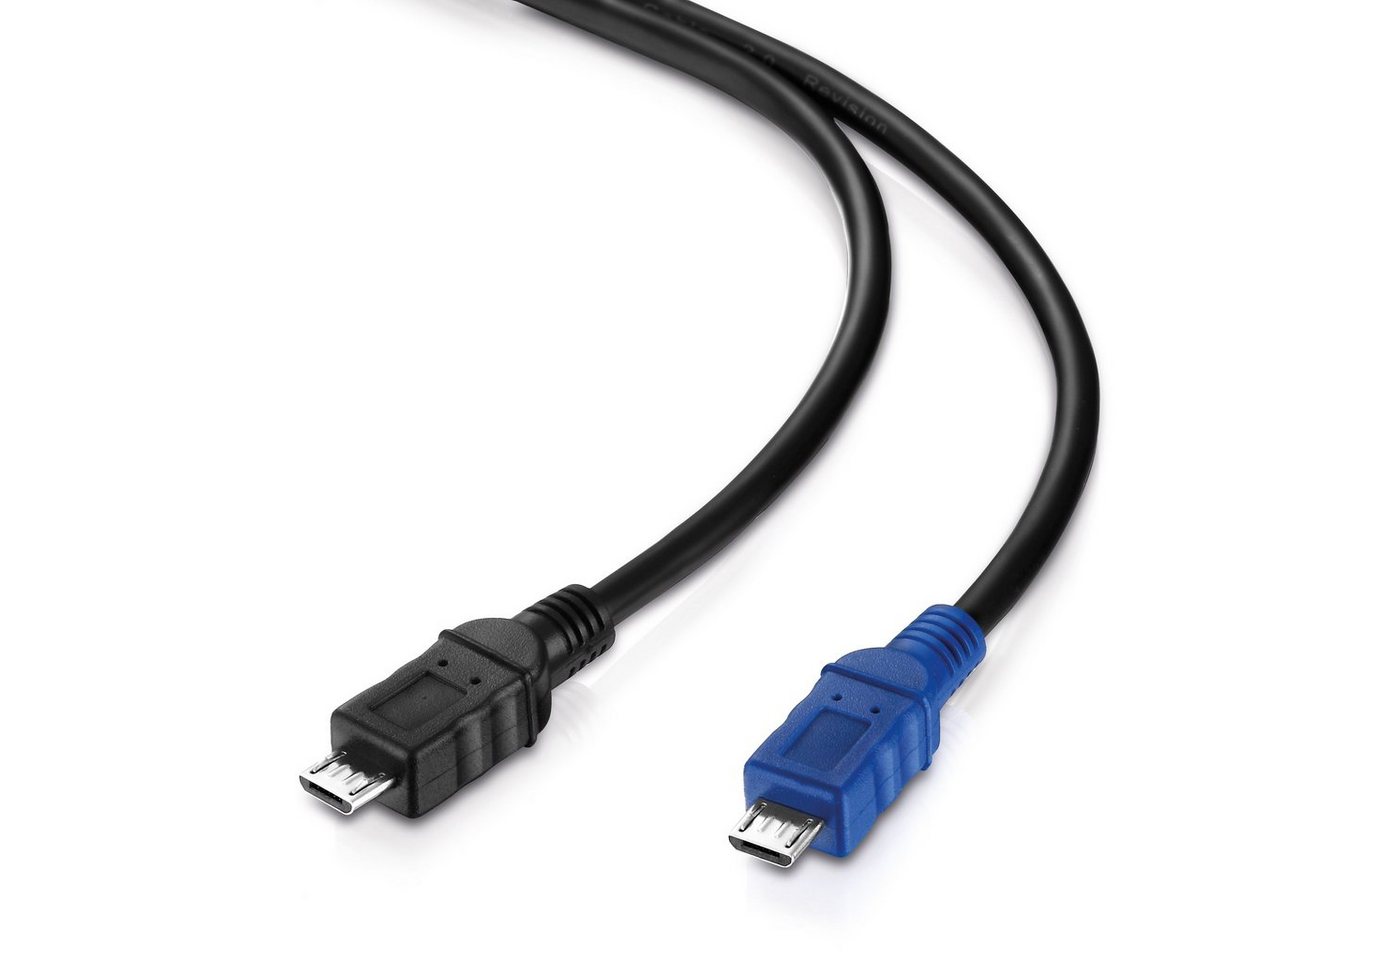 adaptare adaptare 50 cm OTG-Ladekabel Micro-USB-Stecker / Micro-USB-Stecker USB-Kabel von adaptare